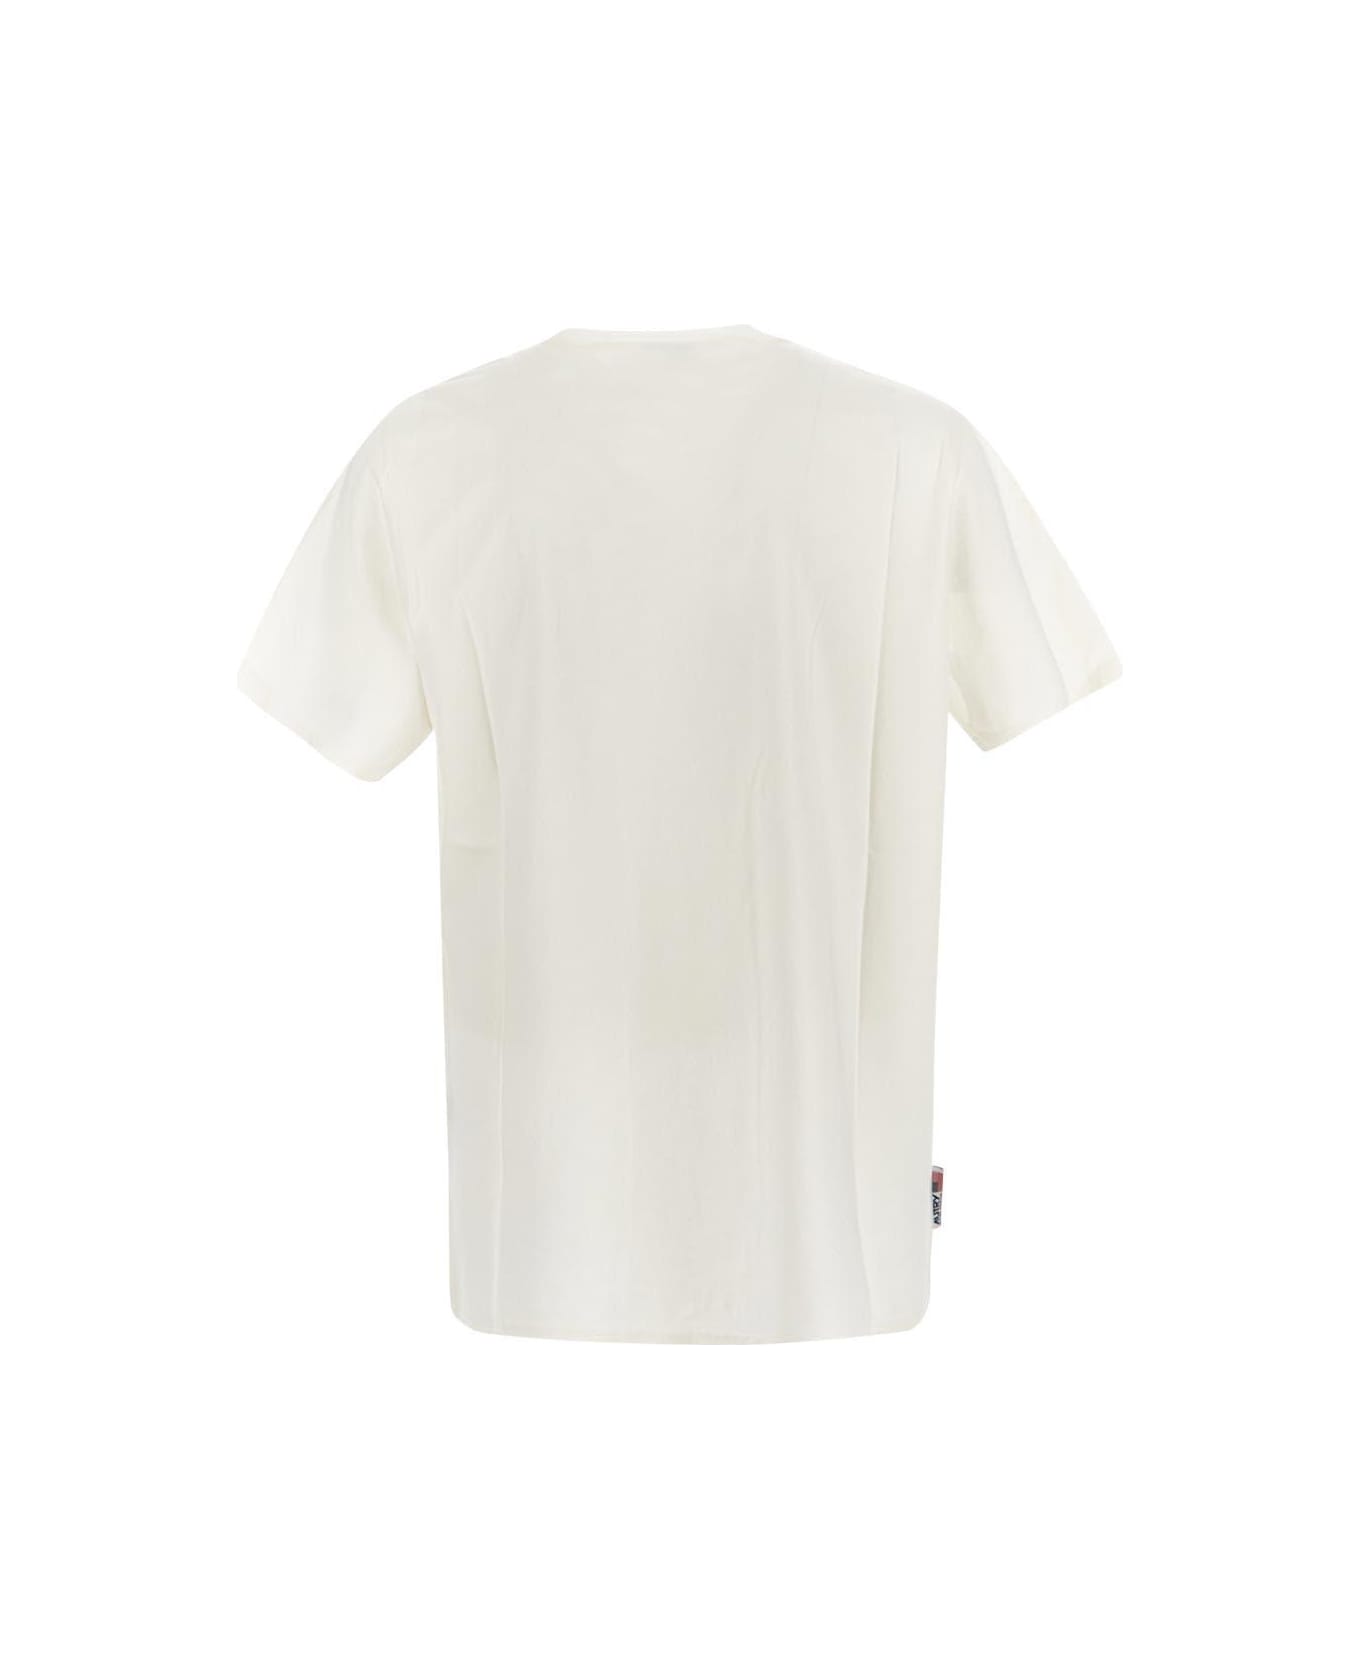 Autry Logo T-shirt - WHITE Tシャツ